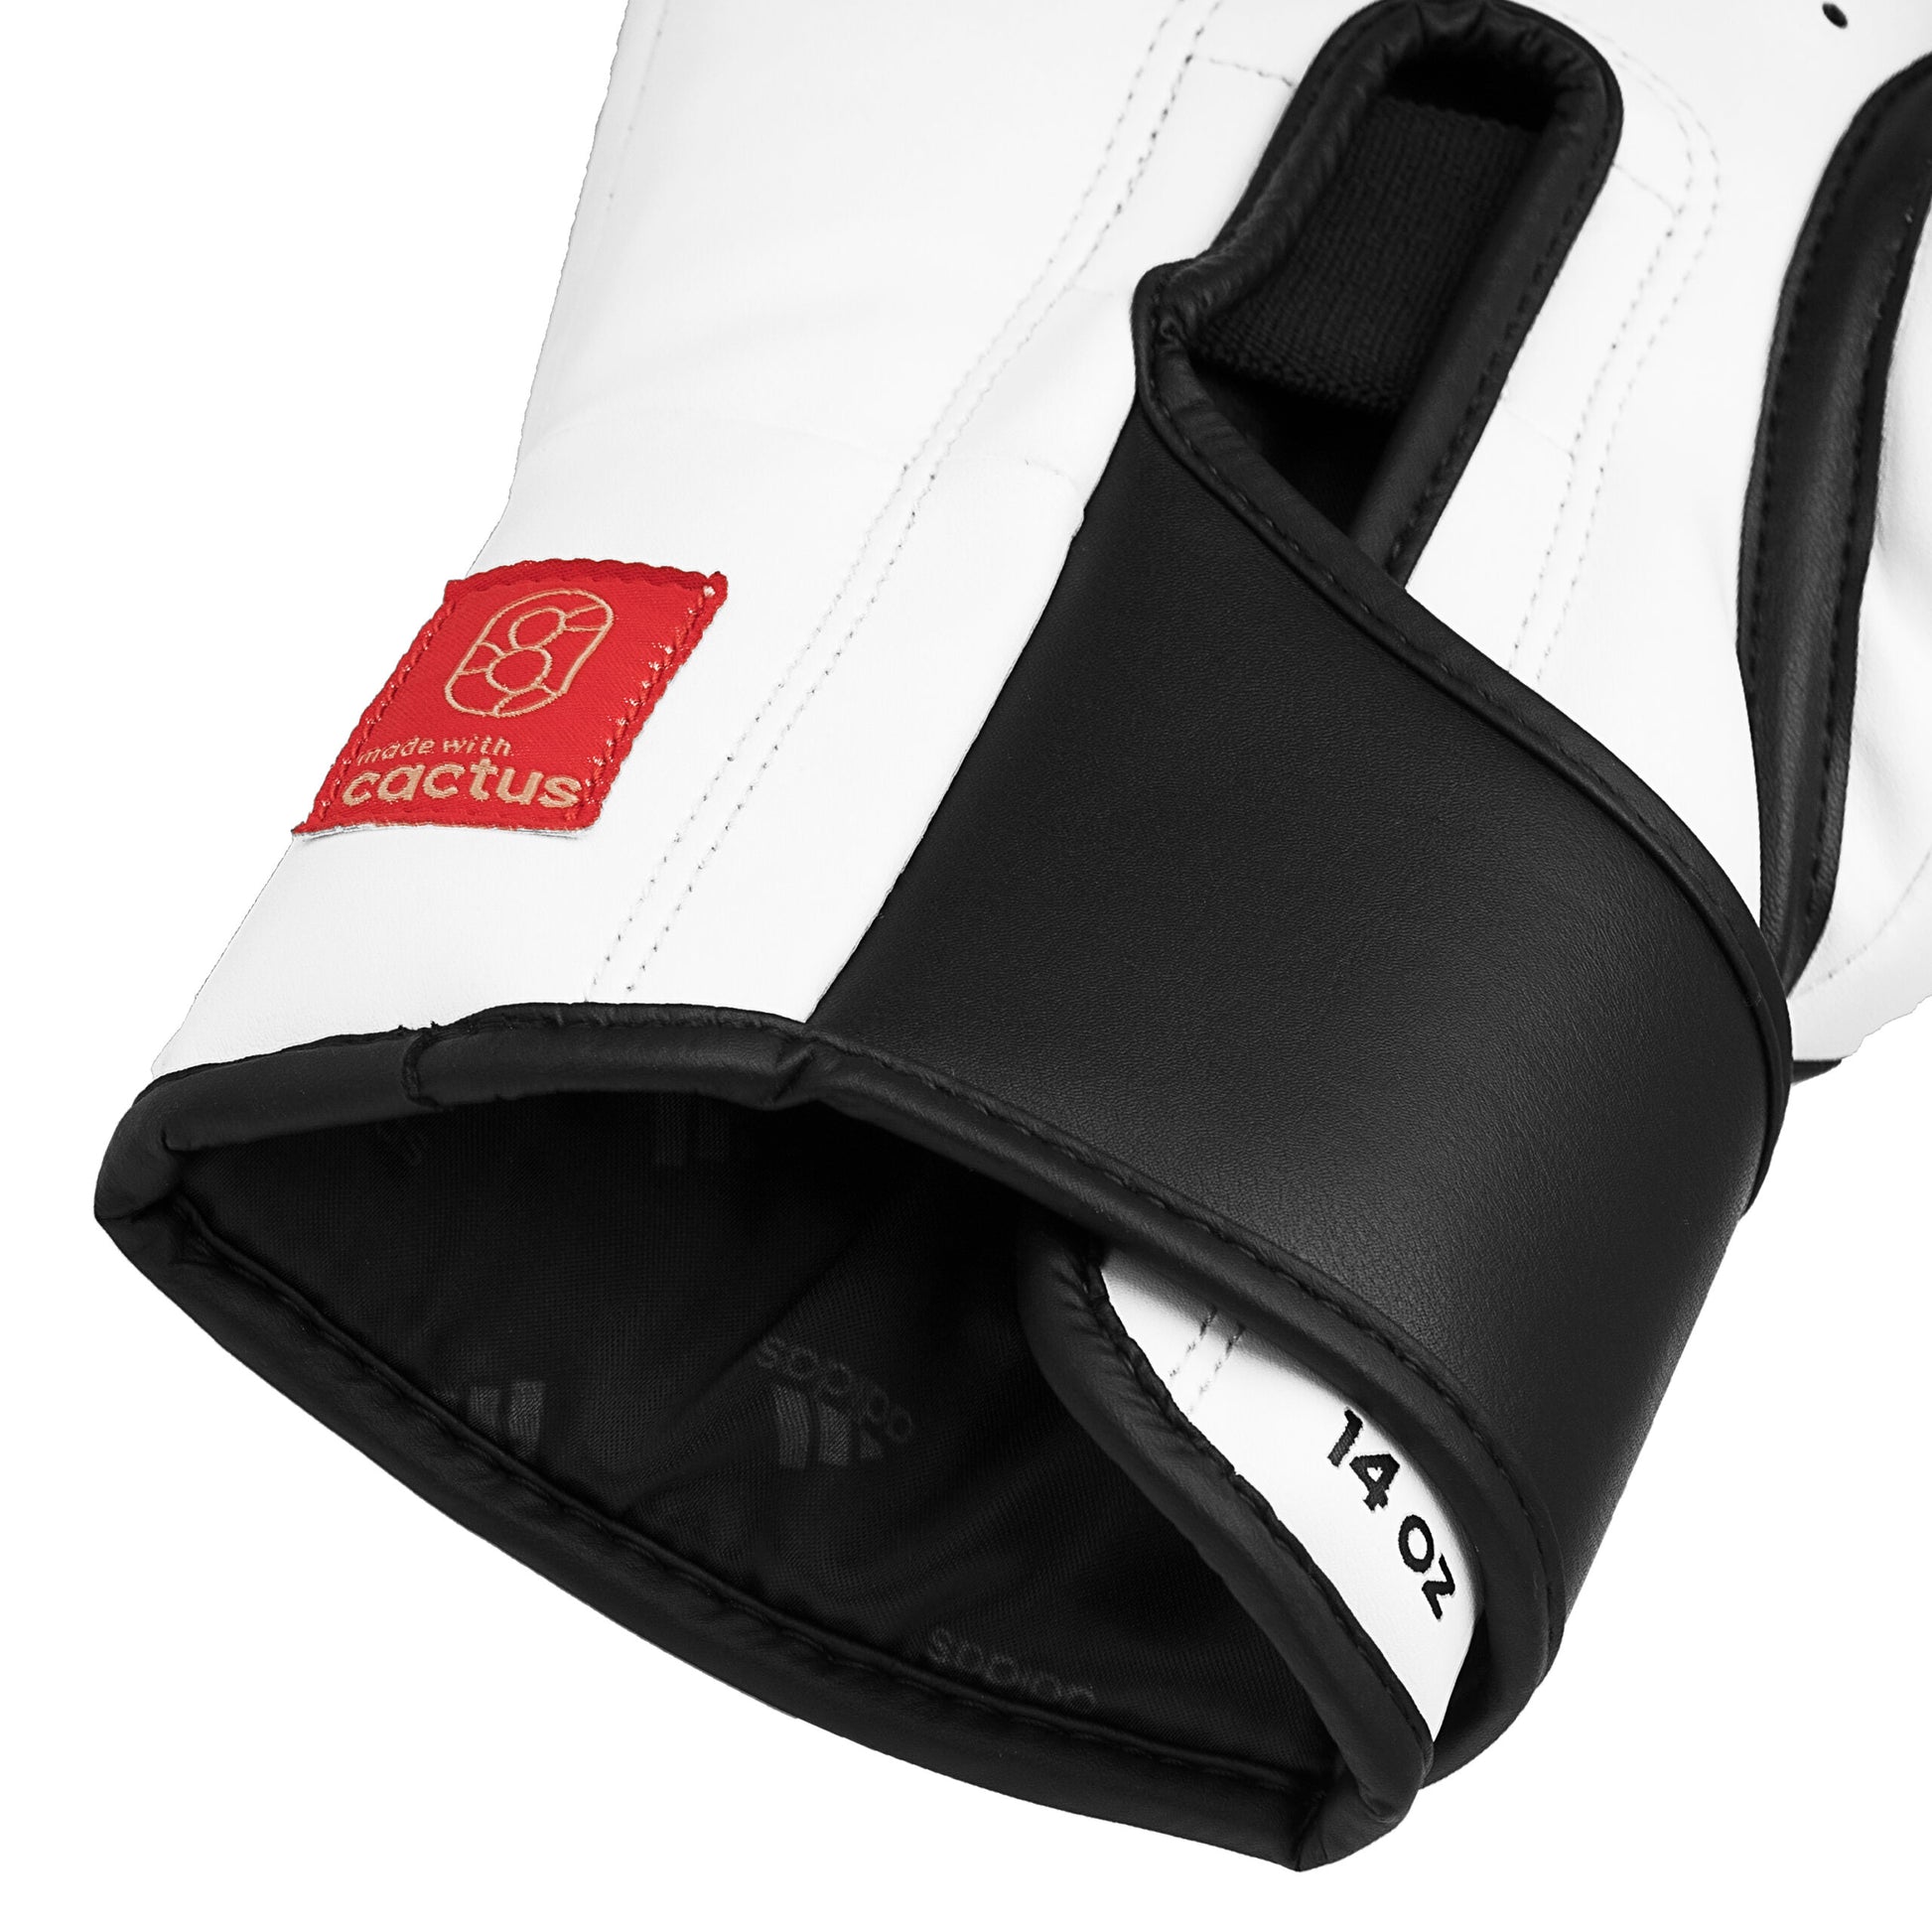 Adispd350tg Adidas Tilt 350 Pro Training Boxing Glove Strap Black White 08